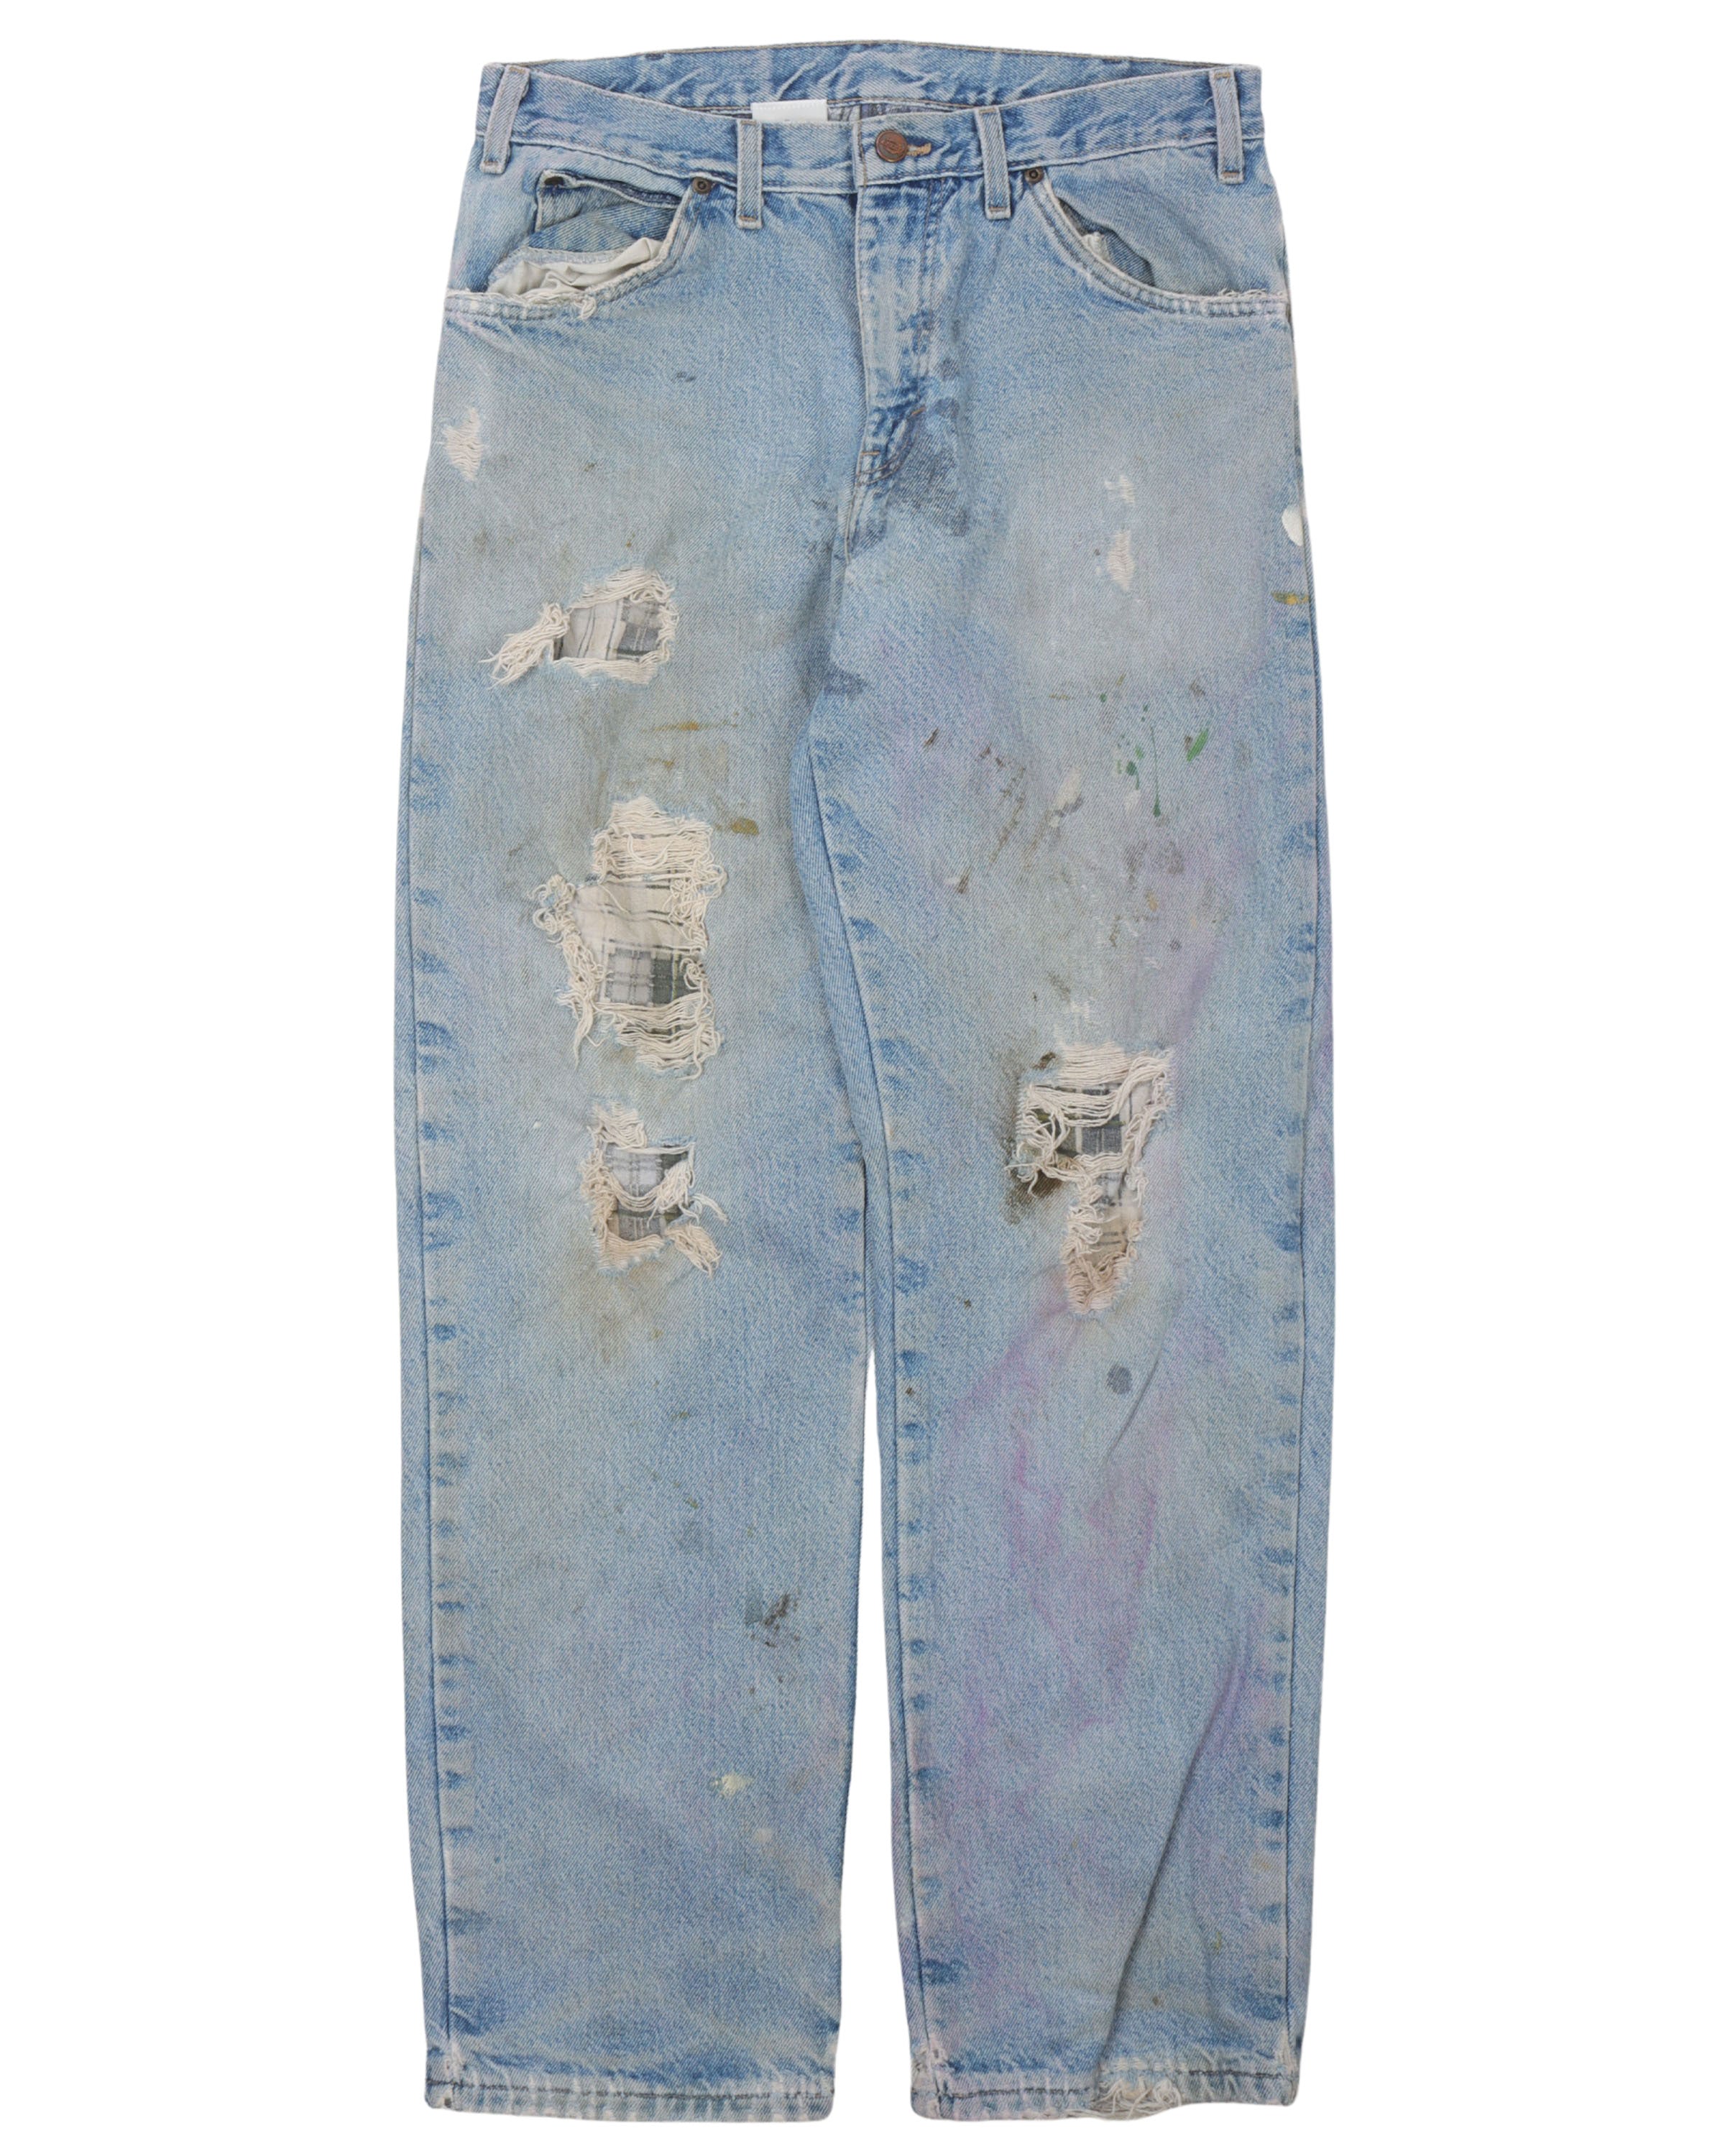 Vintage Dickies Flannel Lined Jeans